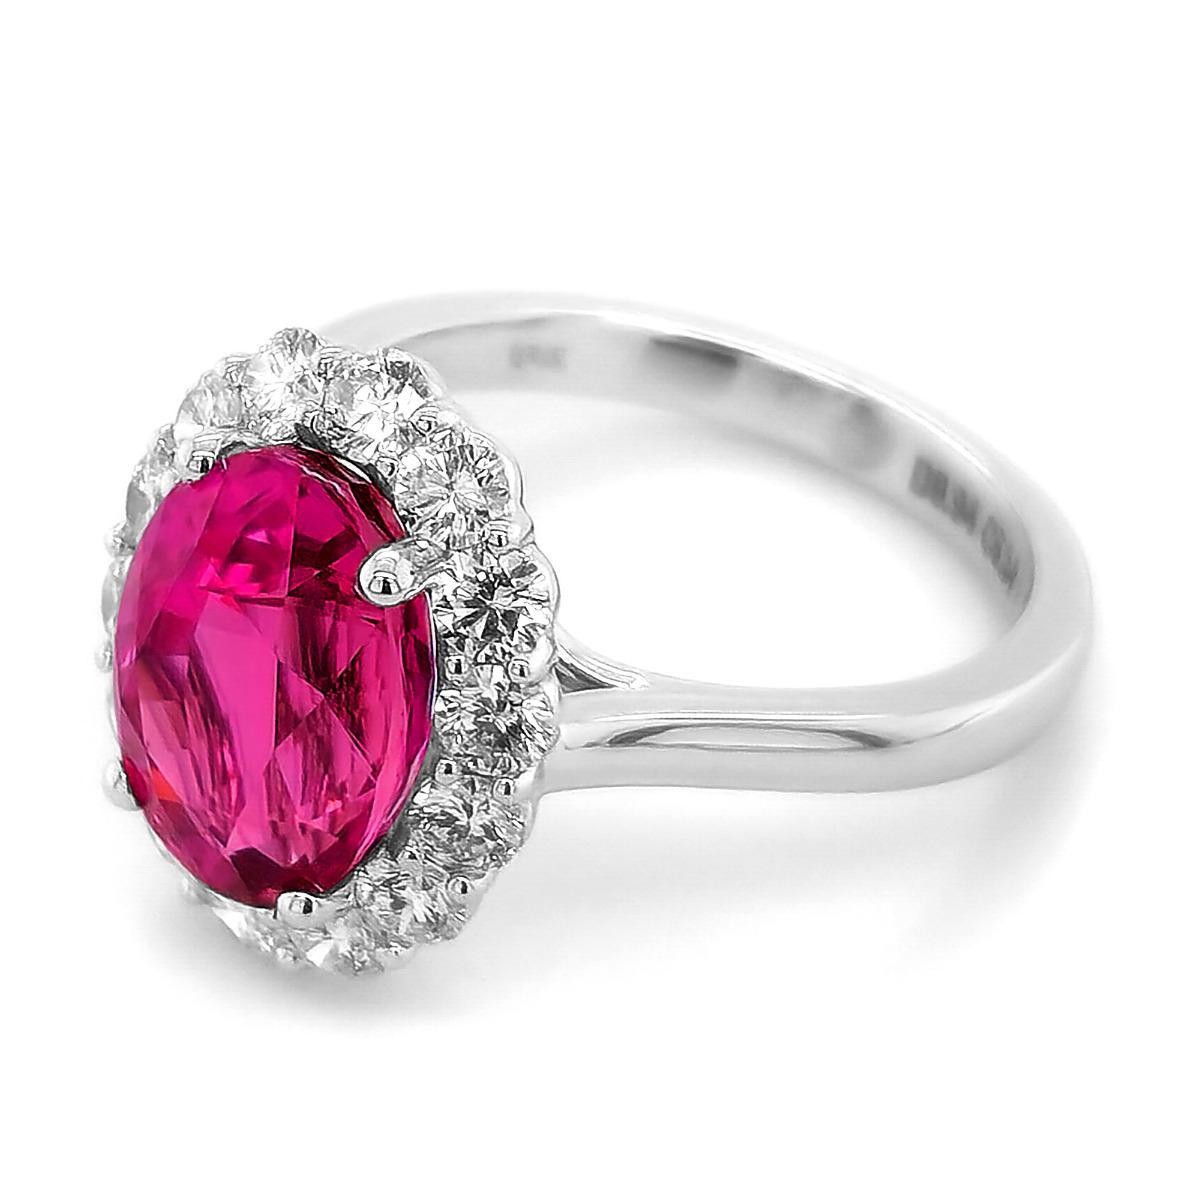 Art Nouveau GIA Certified 5.34 Carat Madagascar Pink Sapphire Diamond 18k White Gold Ring For Sale